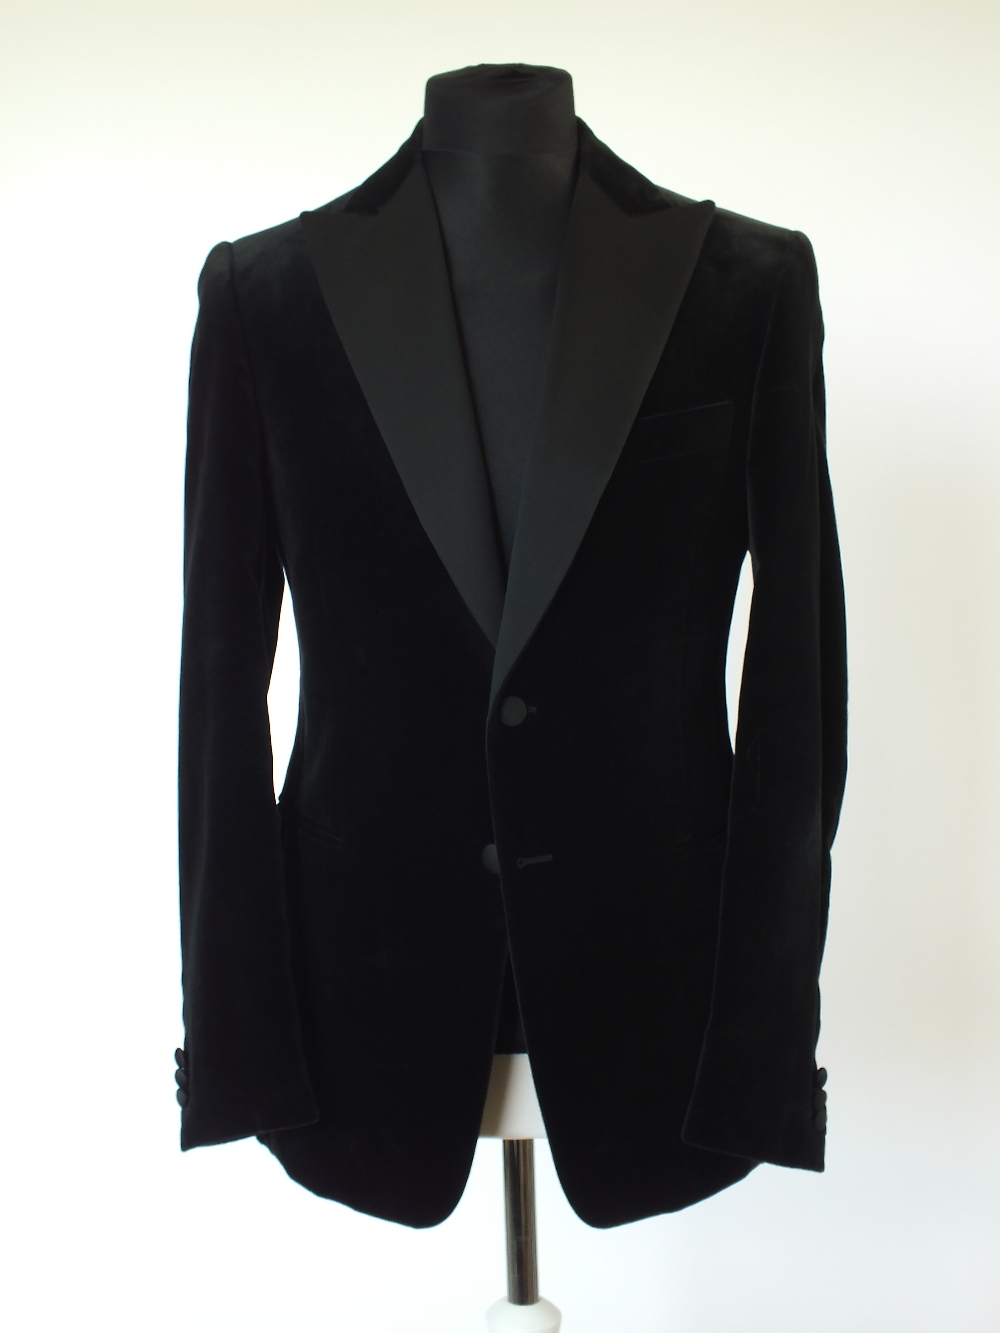 A Pal Zileri Ceromonia dinner suit, black, velvet, satin lower lapel, single vent, Italian size 52R,